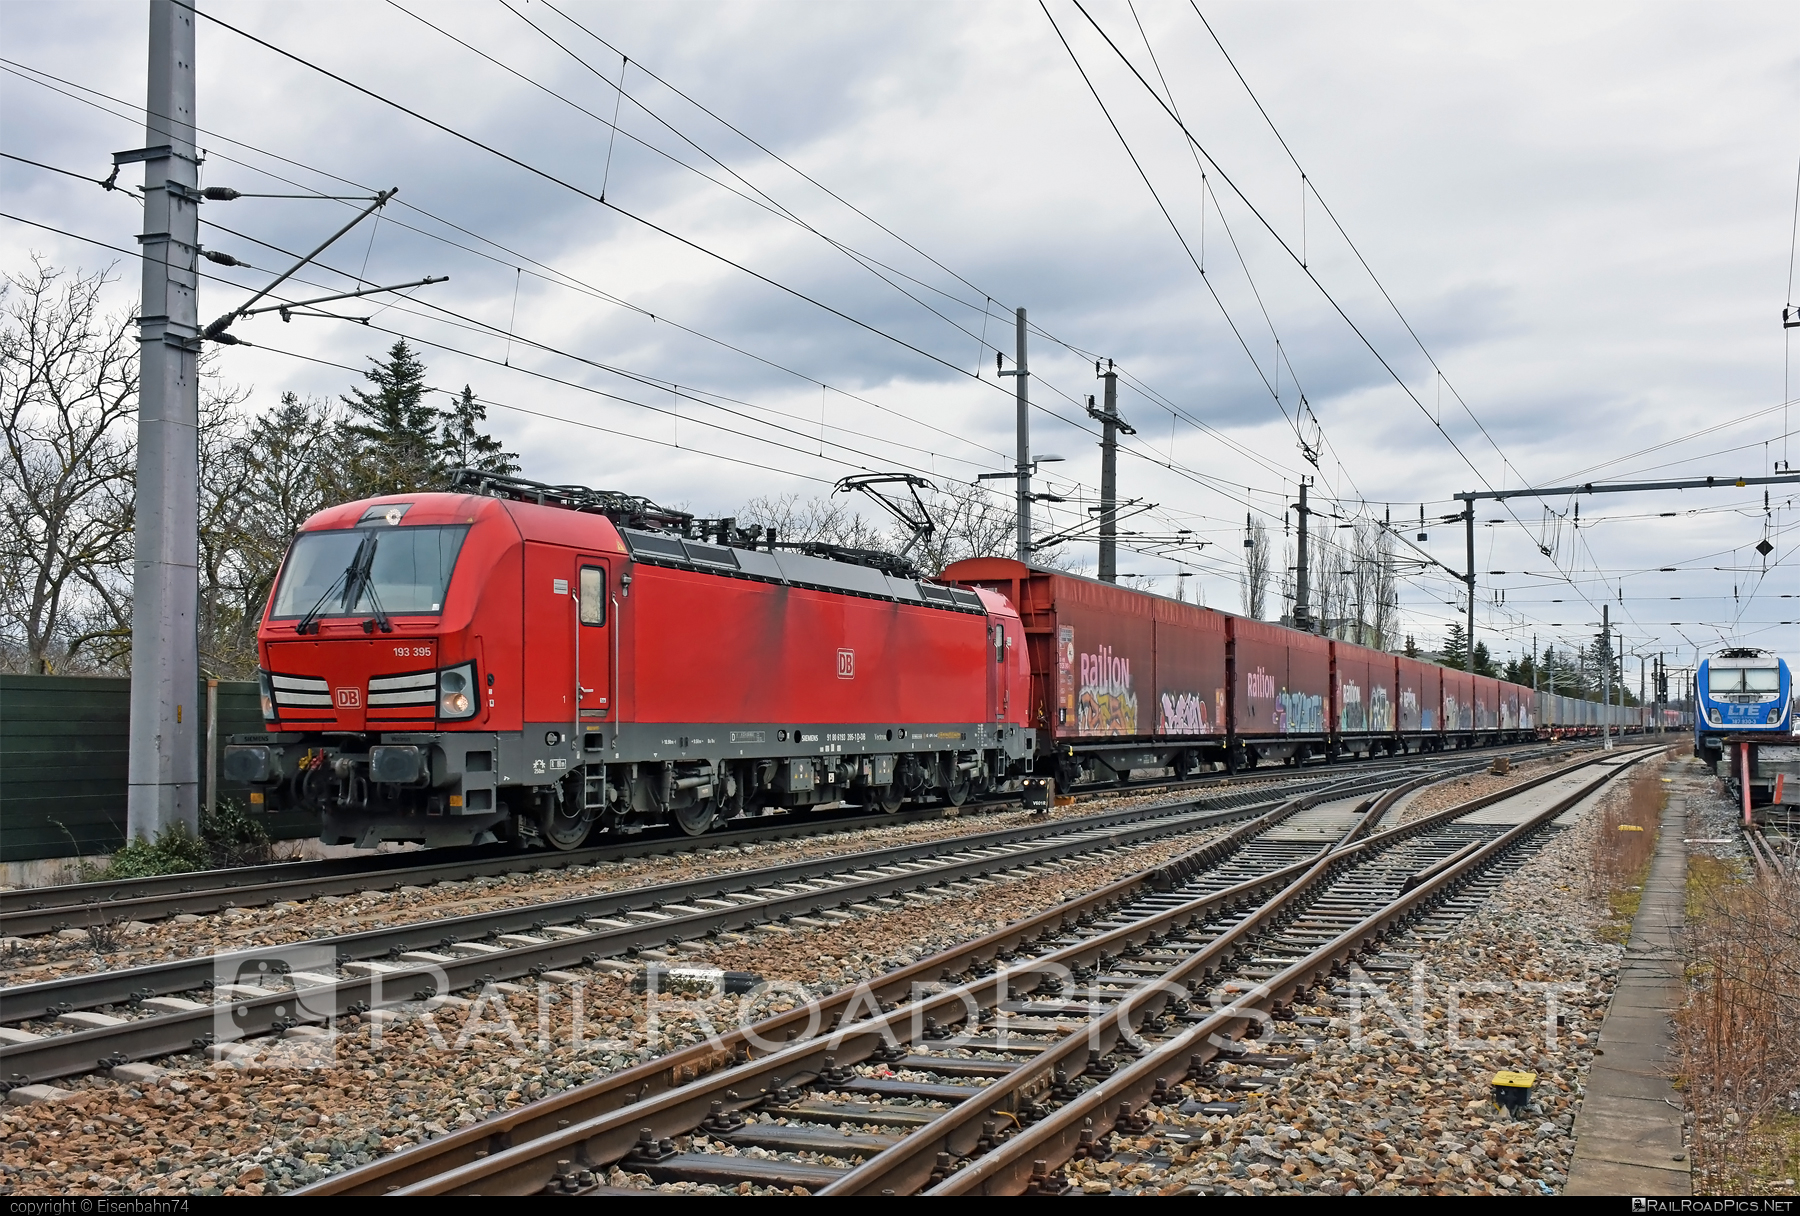 Siemens Vectron MS - 193 395 operated by DB Cargo AG #db #dbcargo #dbcargoag #deutschebahn #railion #siemens #siemensVectron #siemensVectronMS #vectron #vectronMS